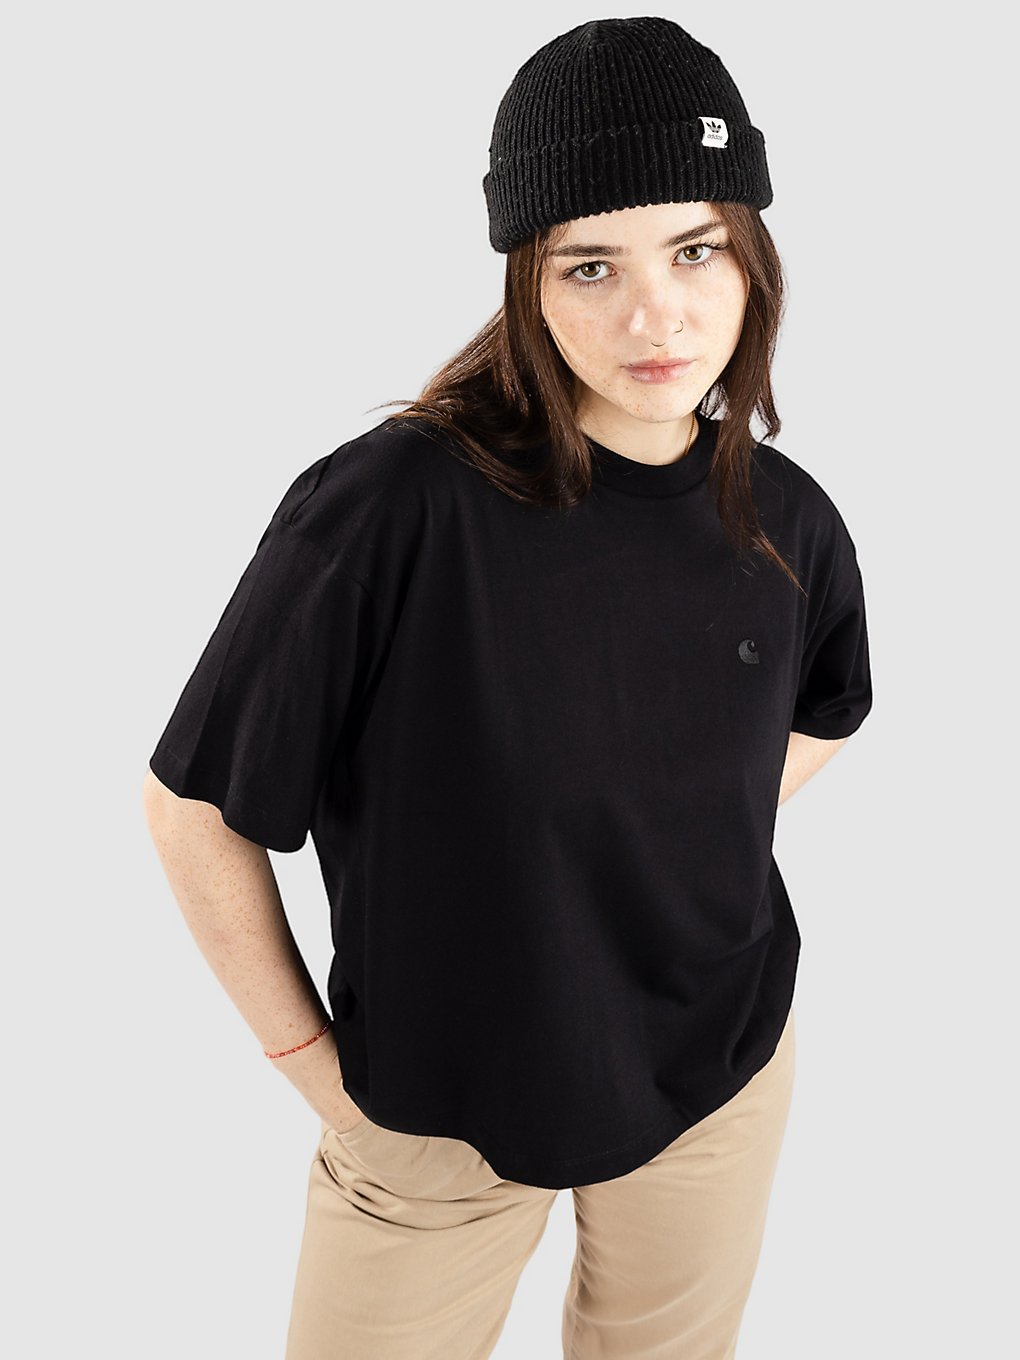 Carhartt WIP Chester T-Shirt black kaufen